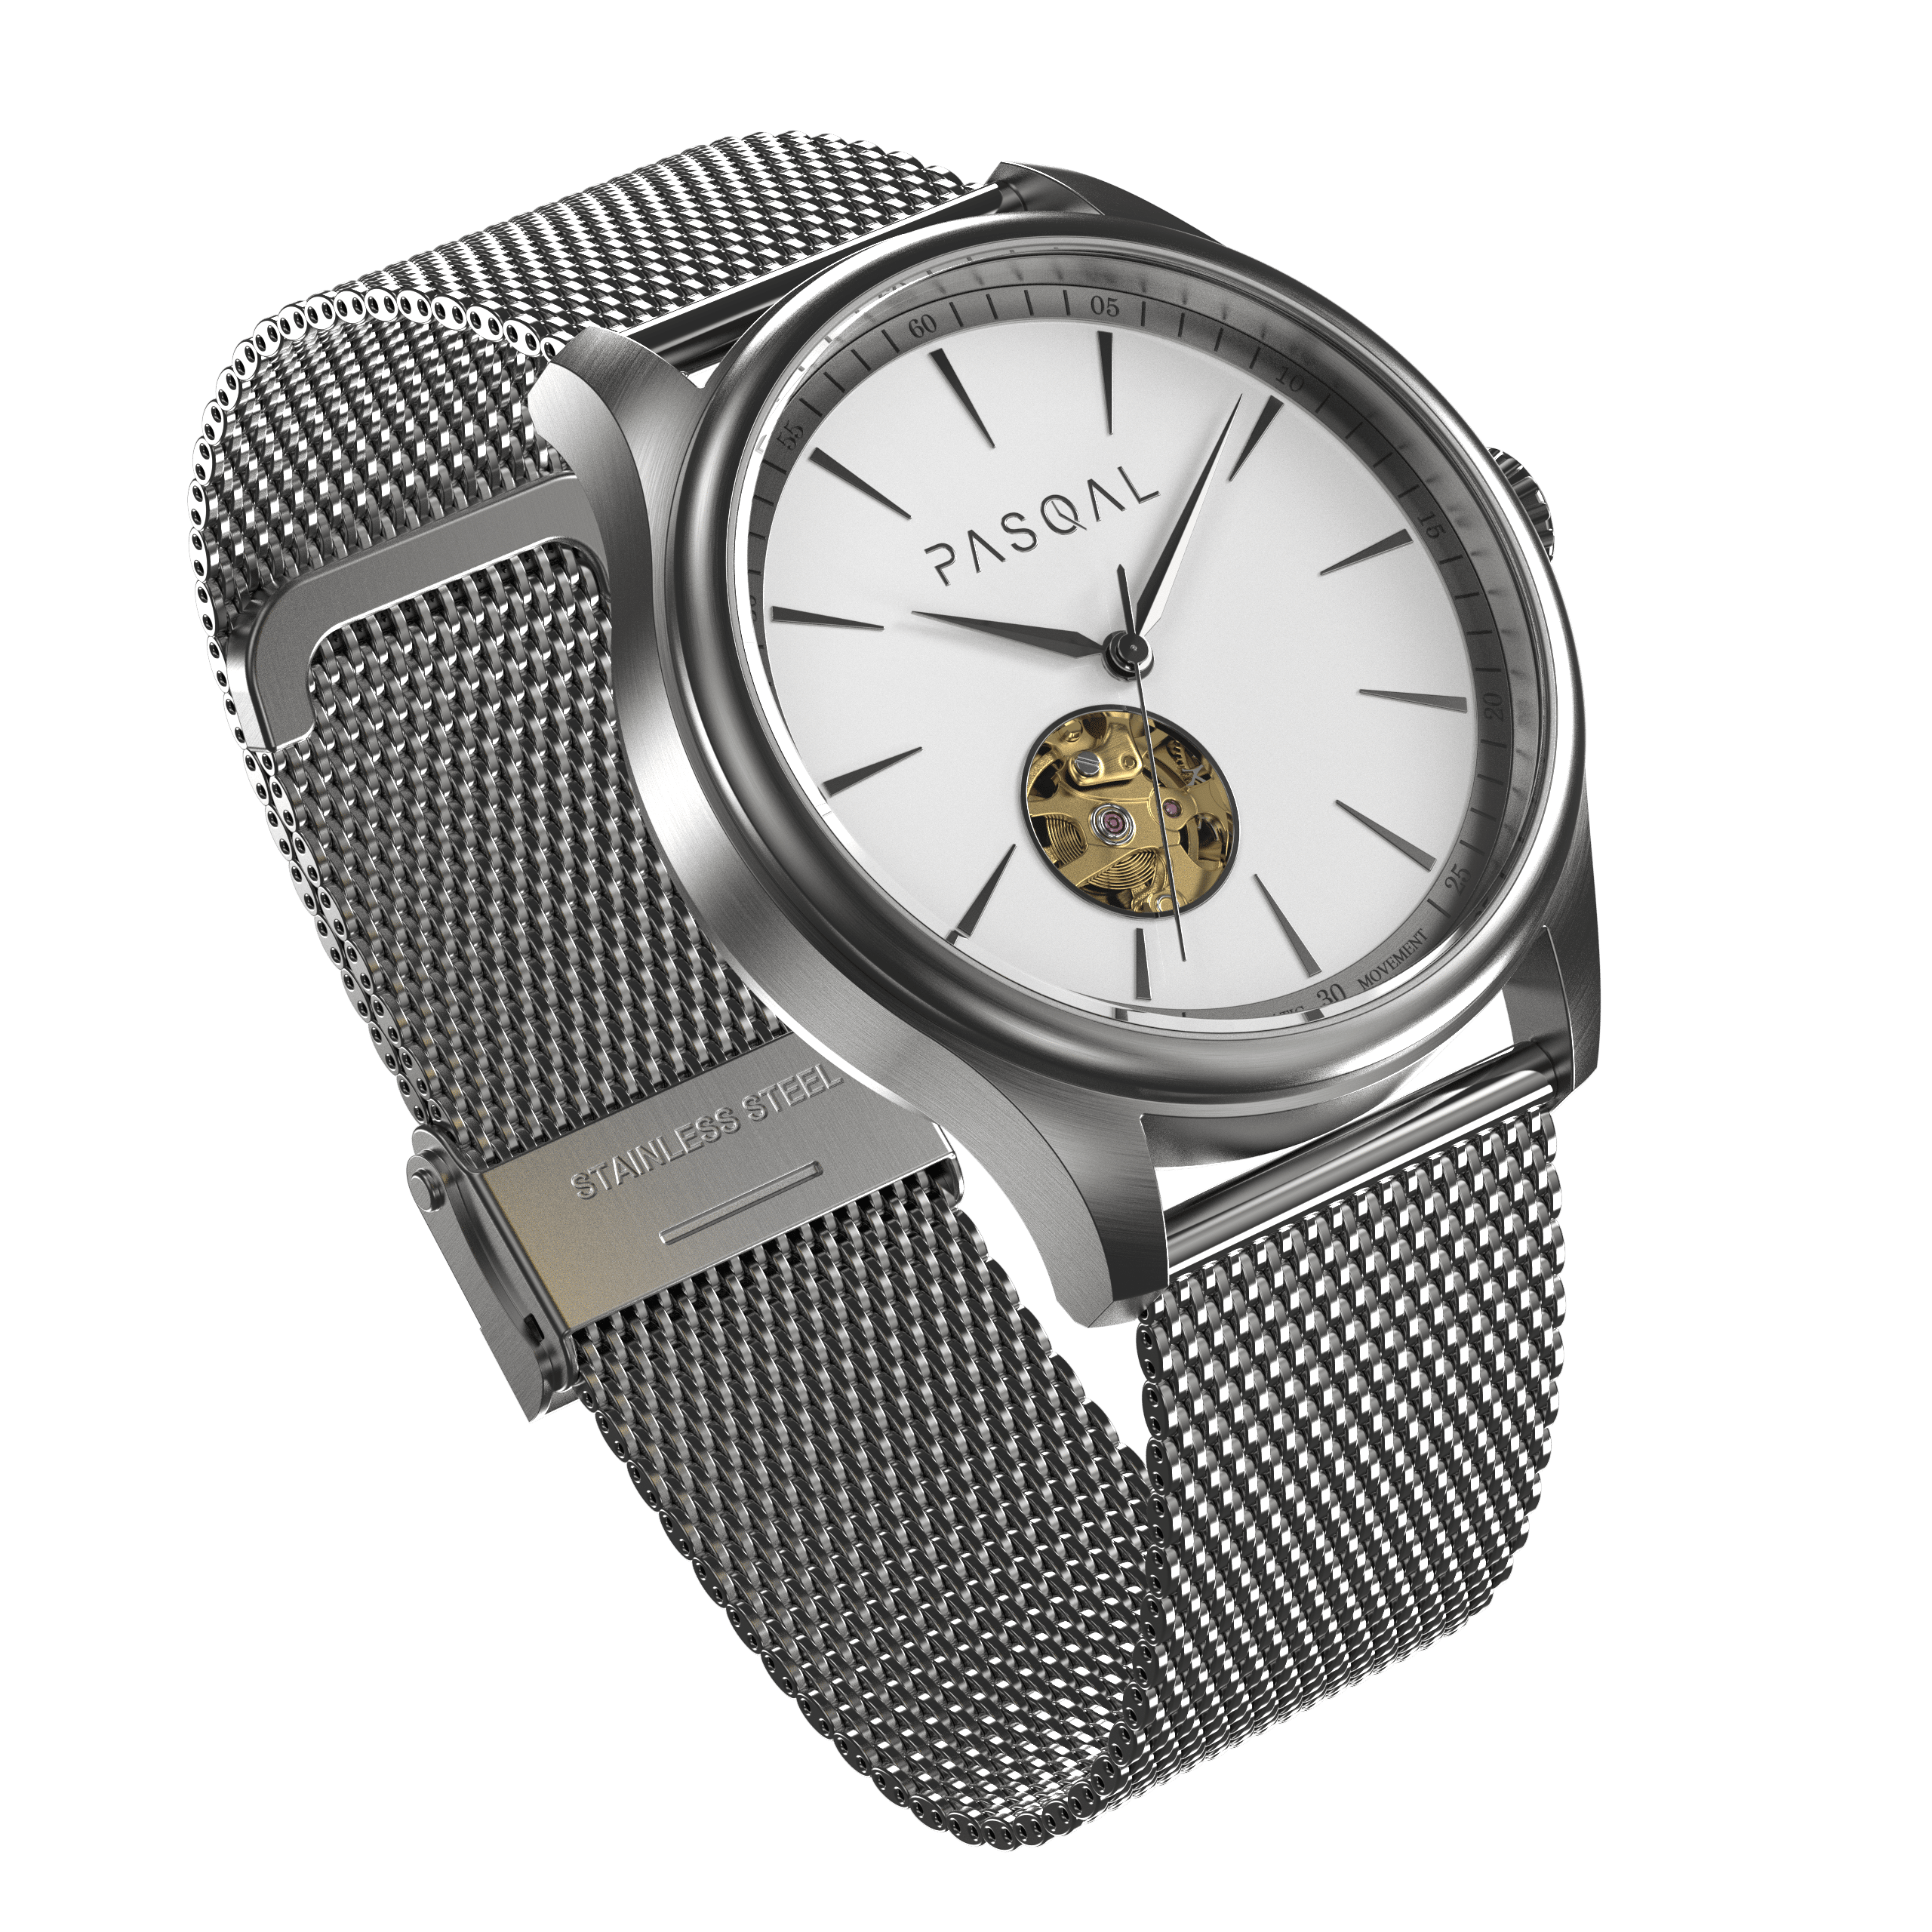 Wilhelm 42 Grey/White - Pasqal Watches